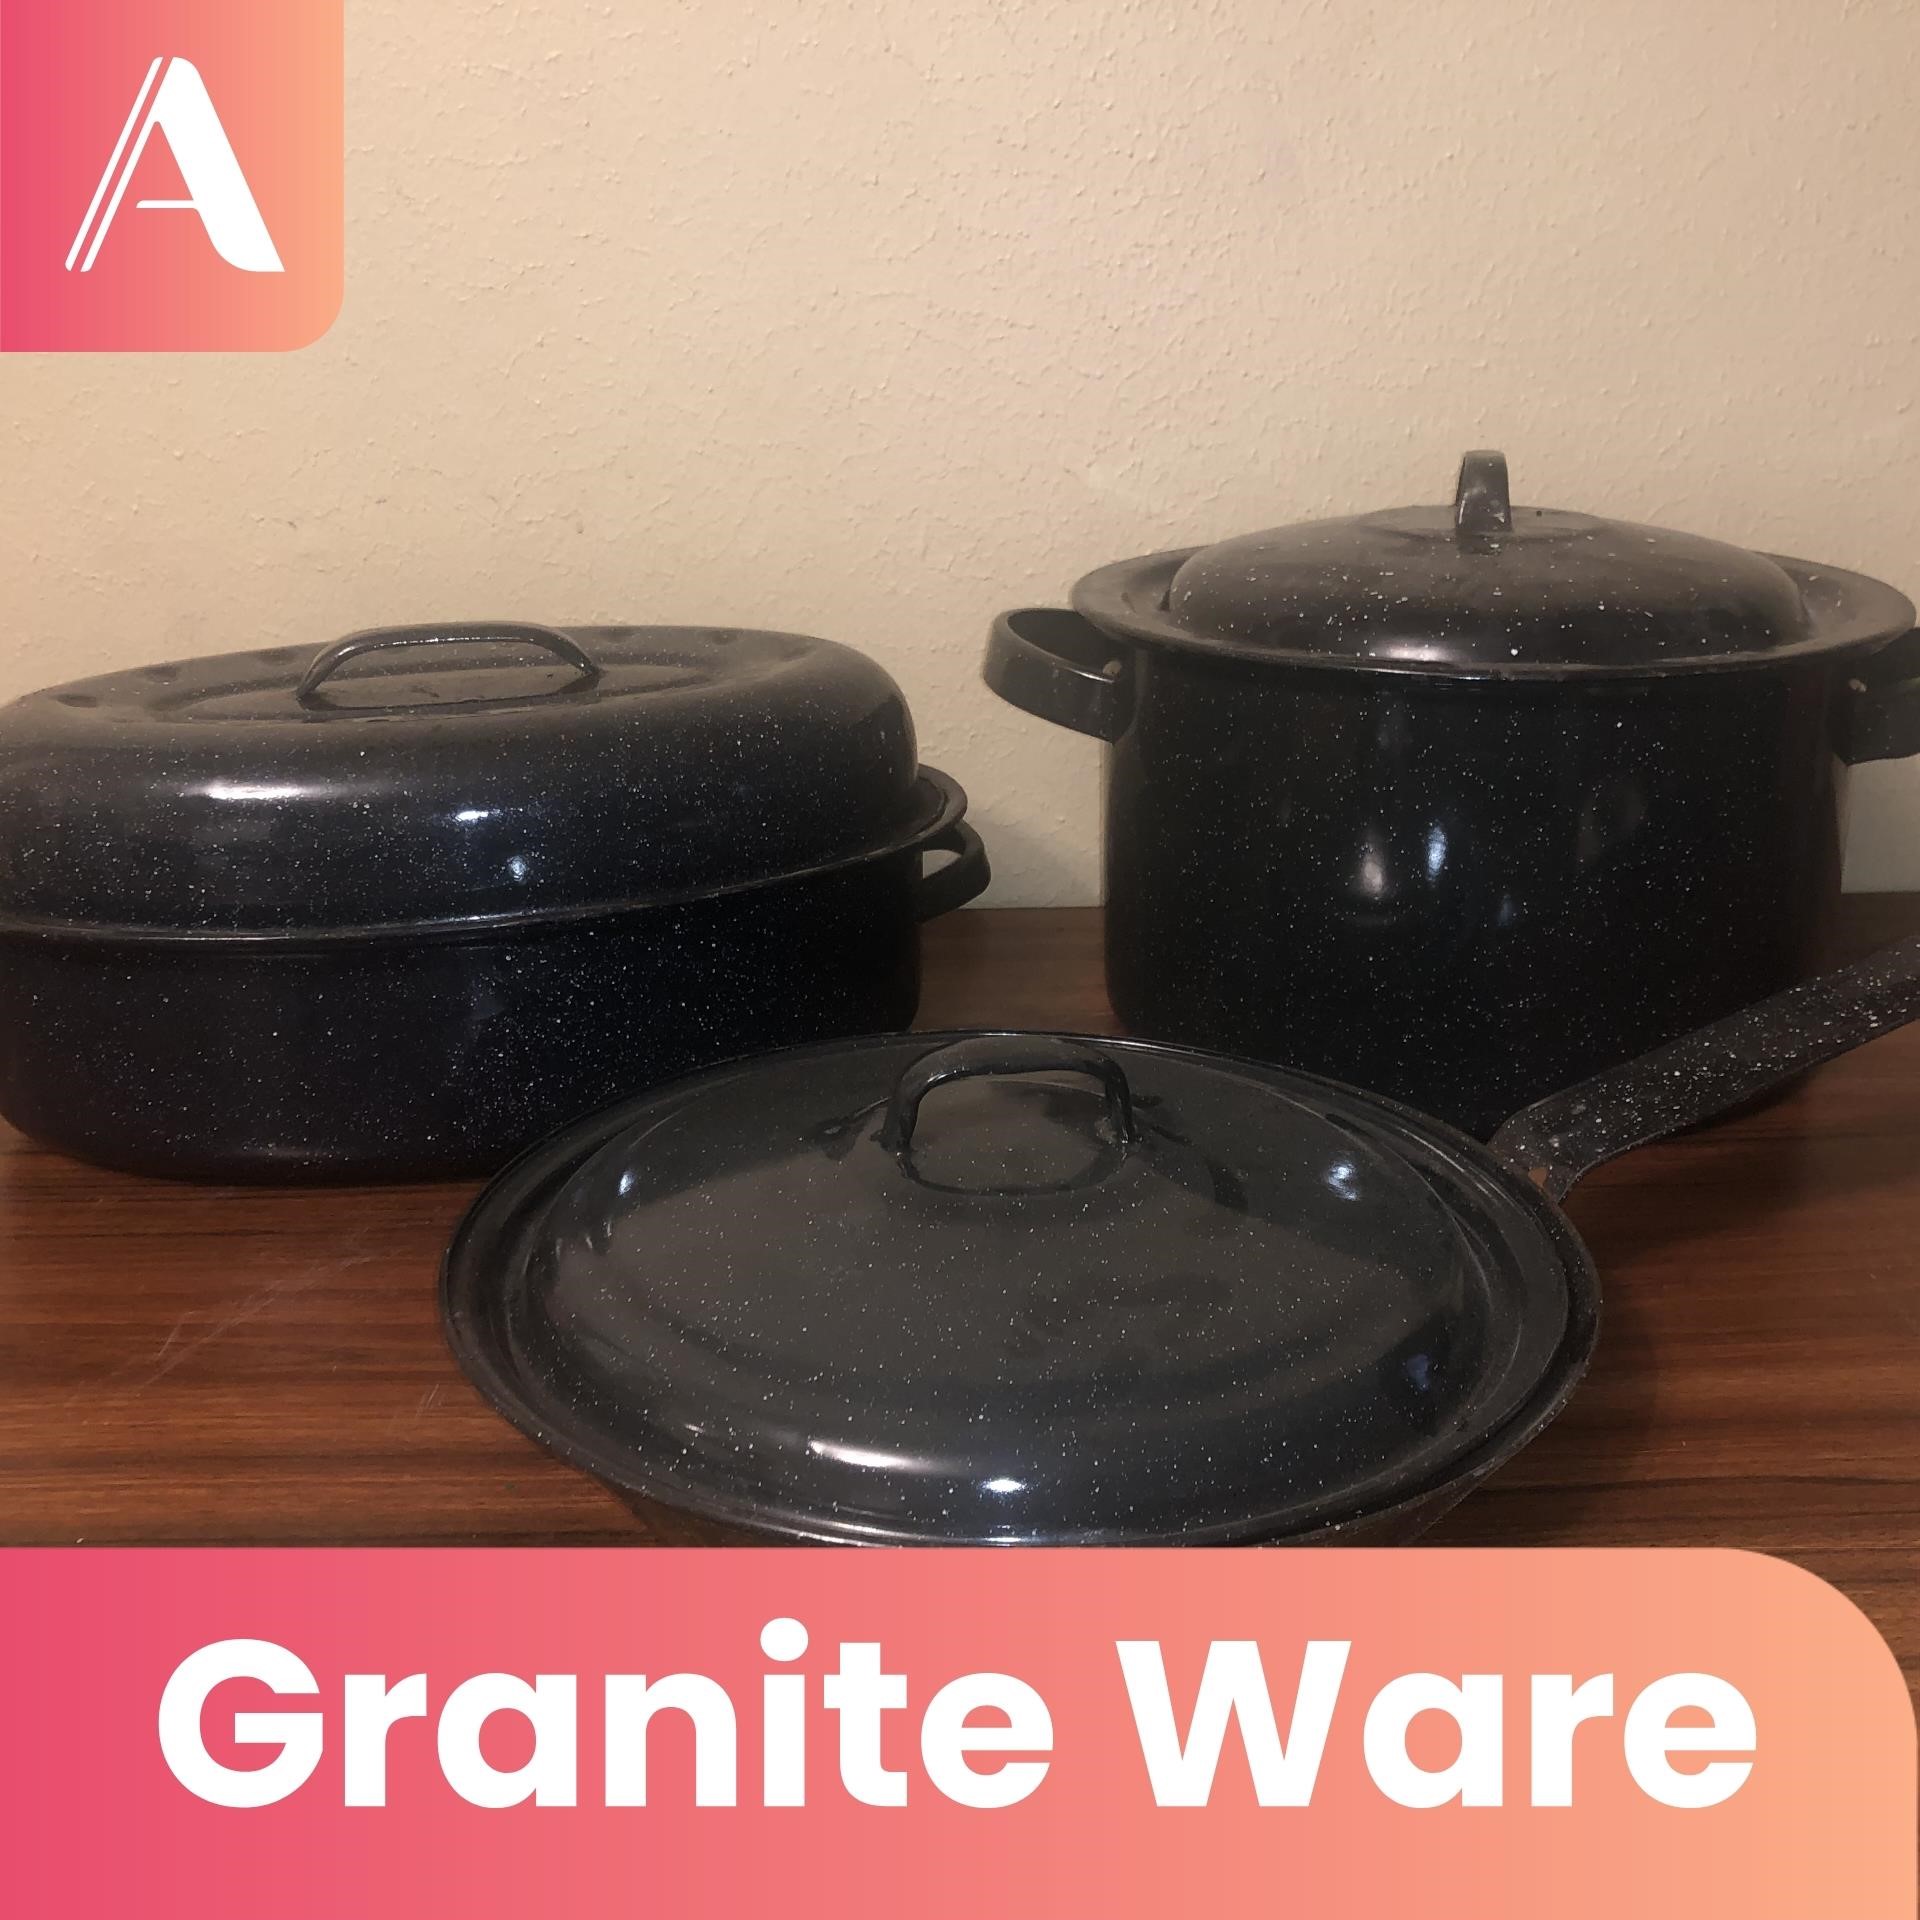 Granite Ware Kitchen Lot